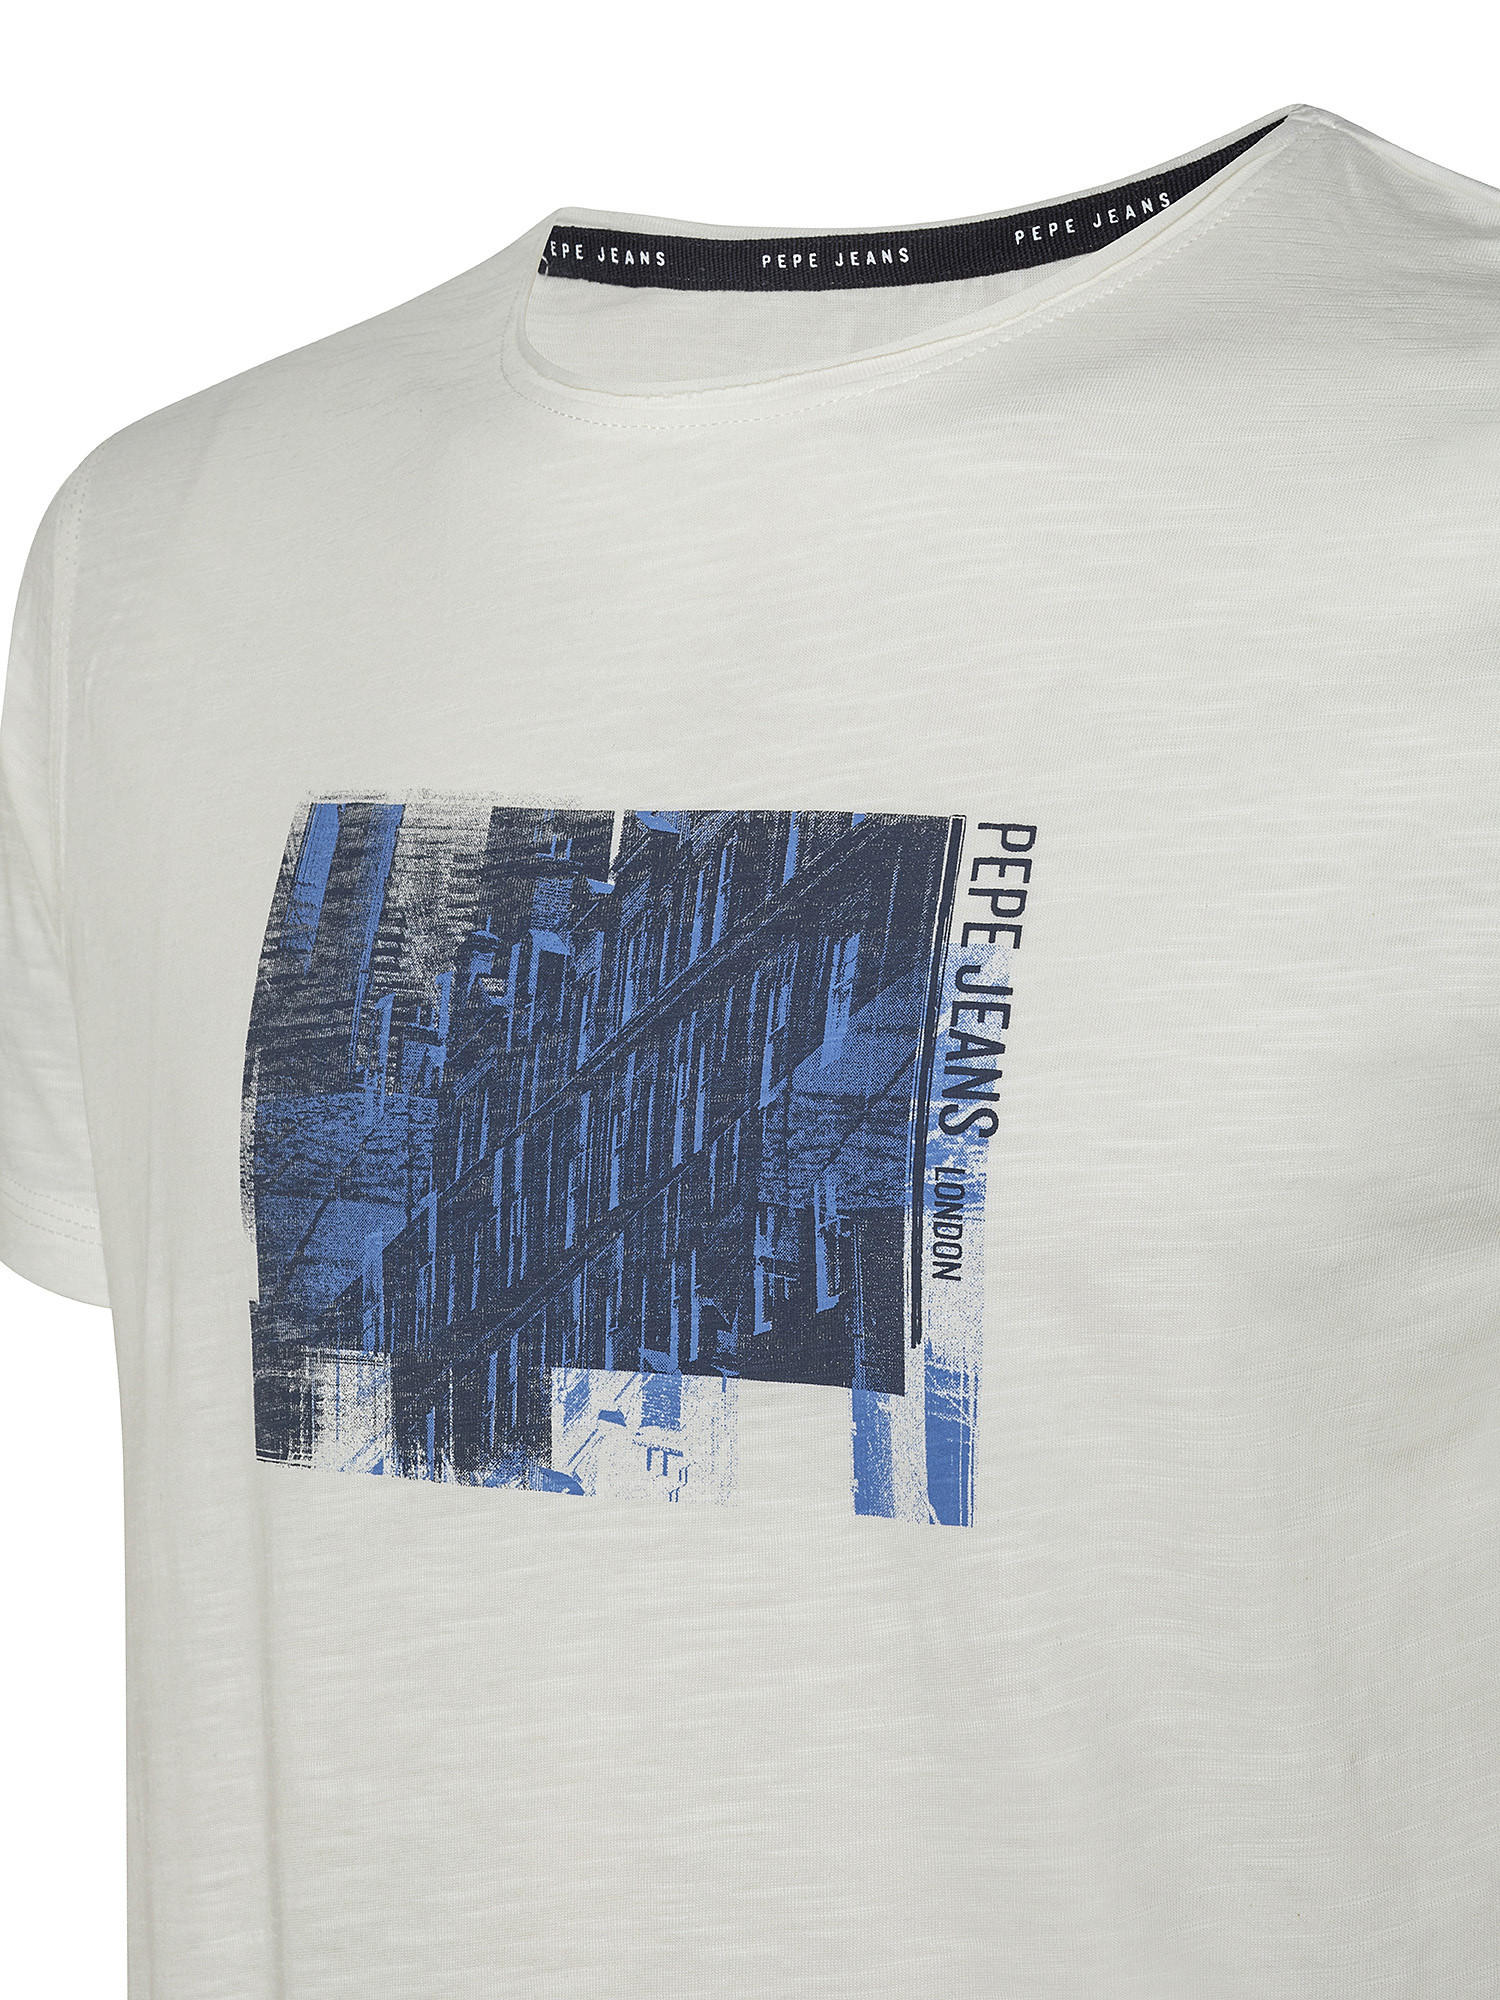 T-shirt in cotone Sherlock, Bianco, large image number 2